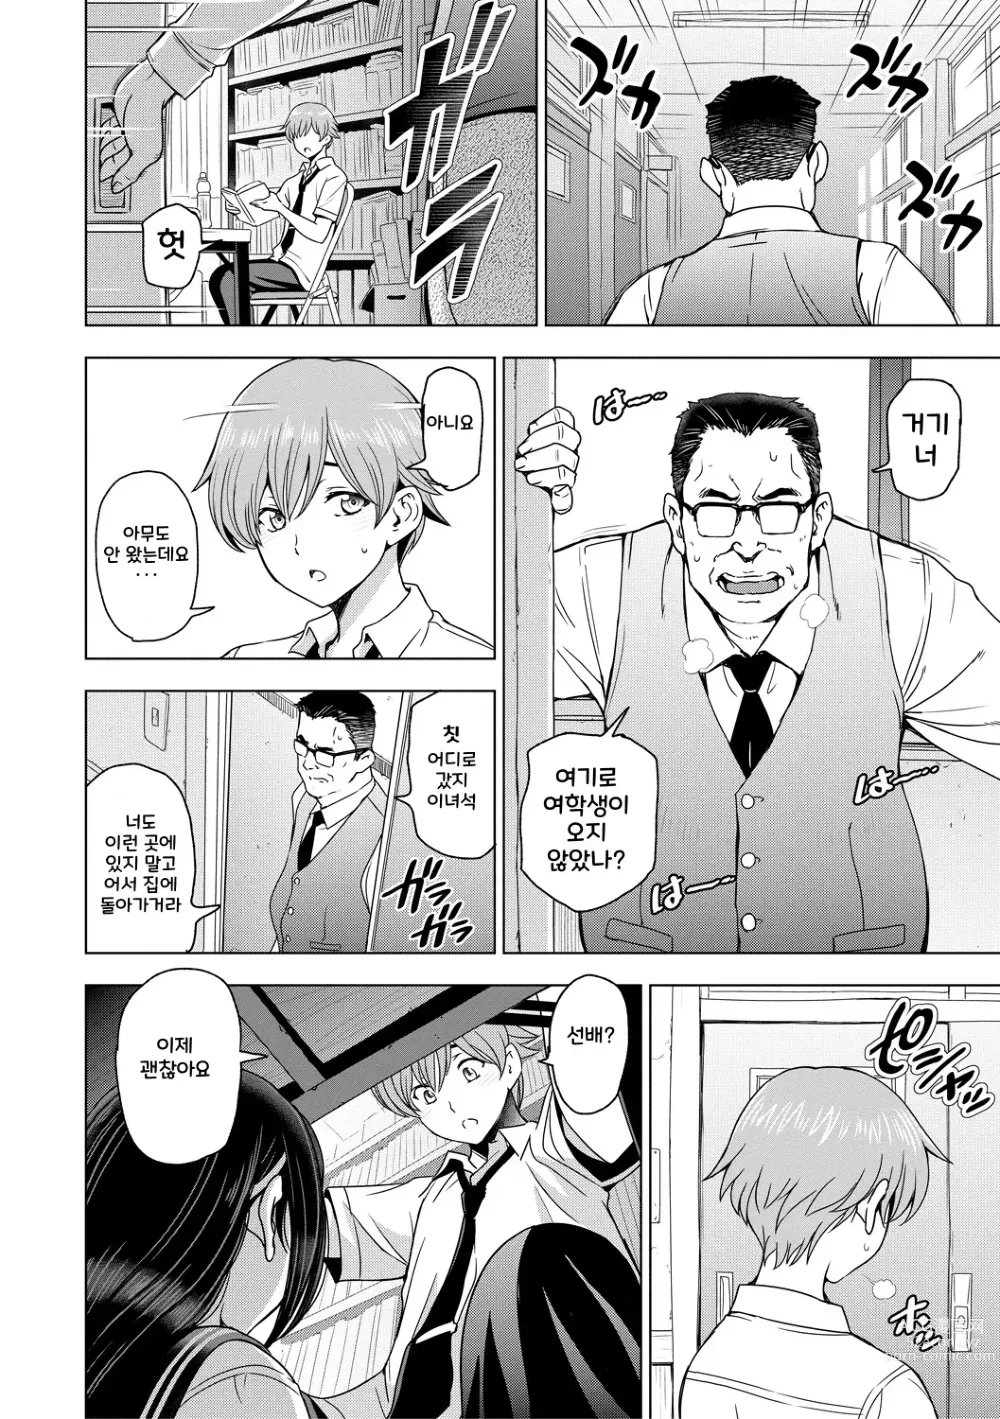 Page 8 of manga Nee Ecchi shichao kka - Hey, lets have sex.